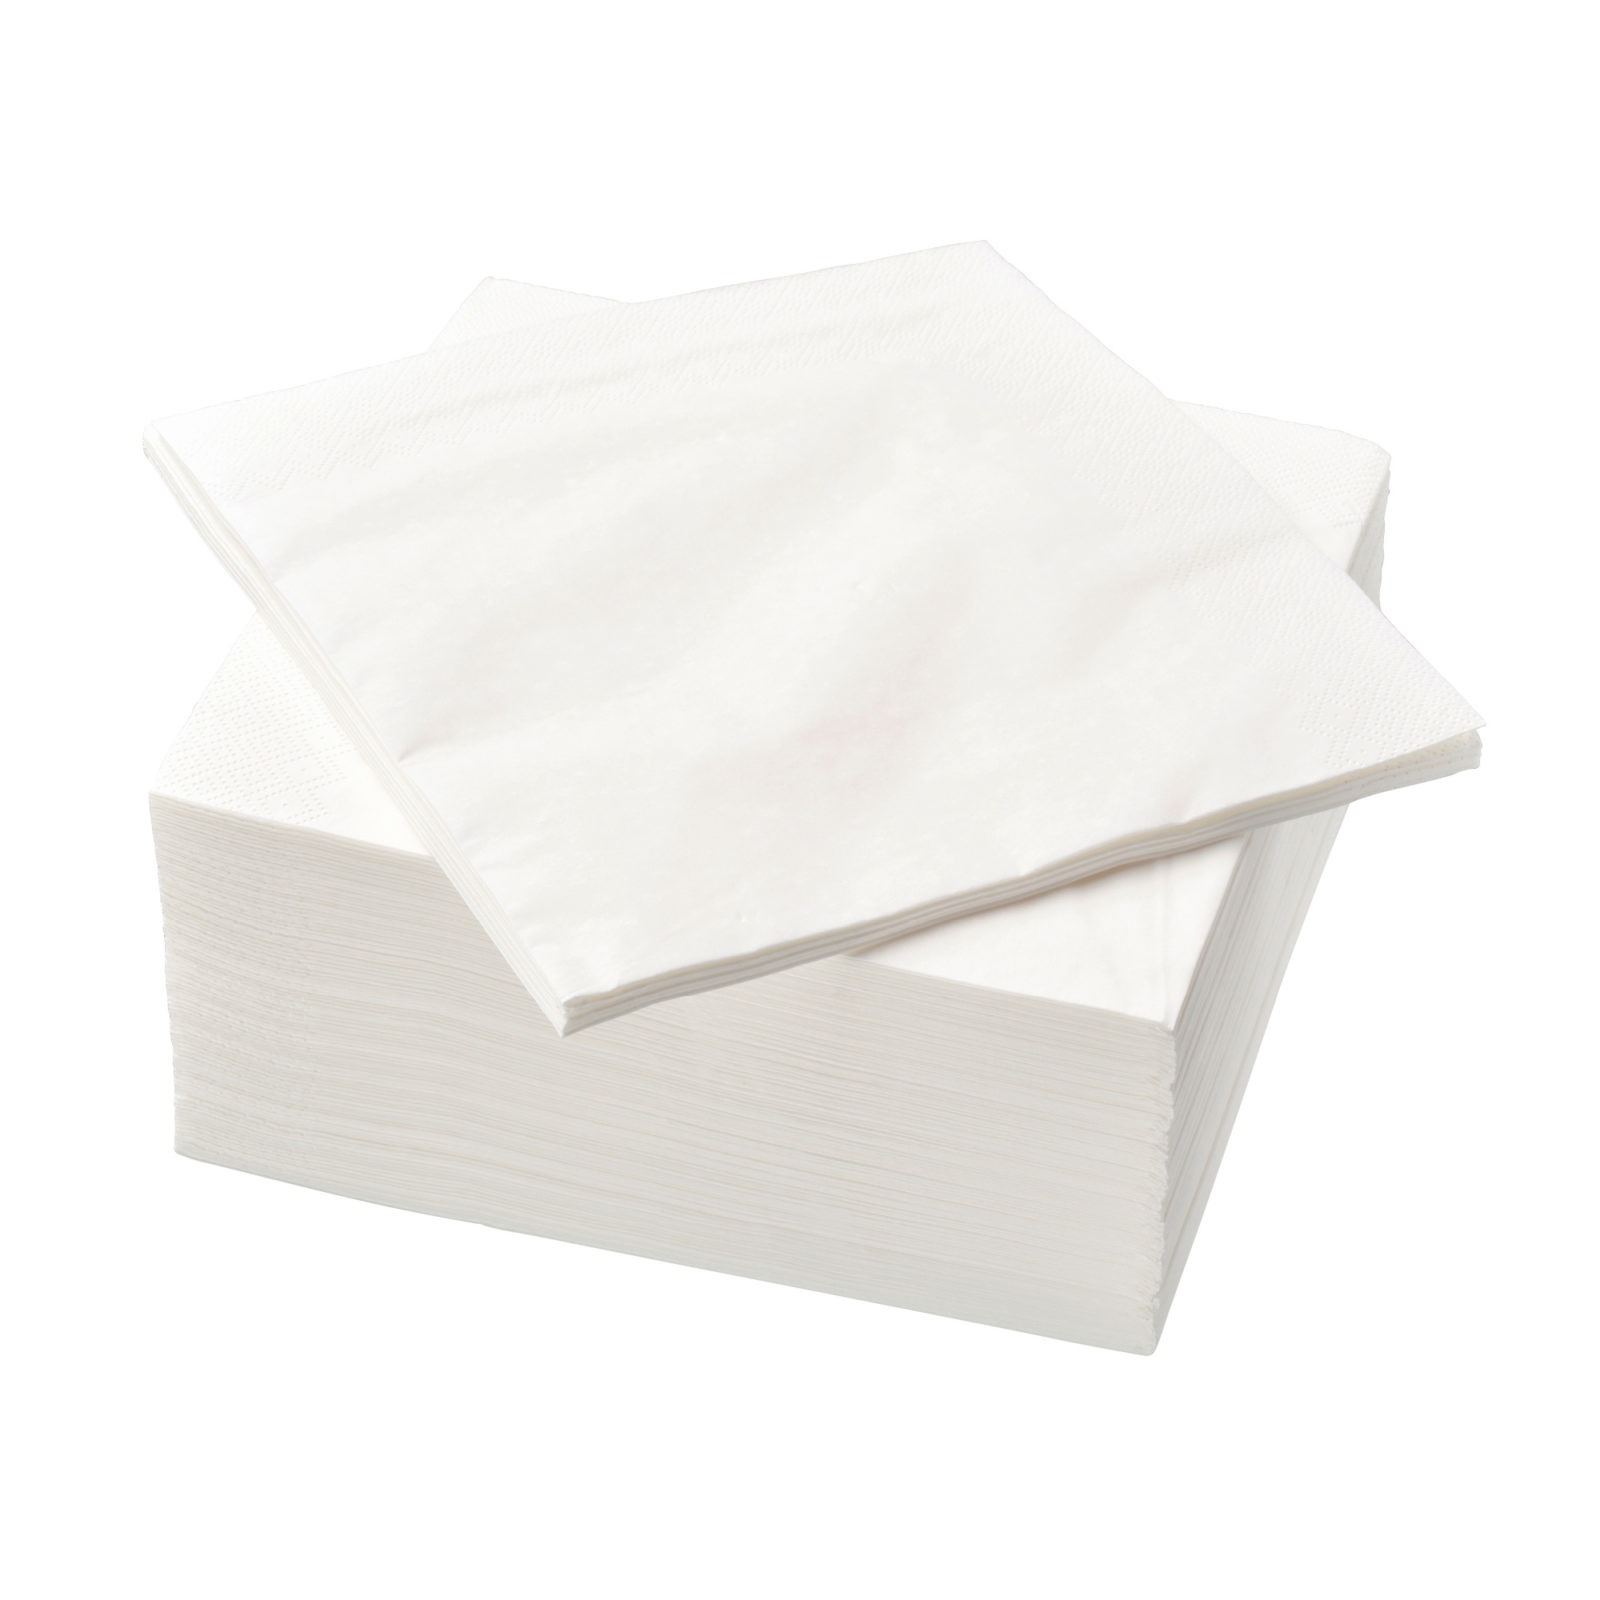 Pila de servilletas blancas de papel.